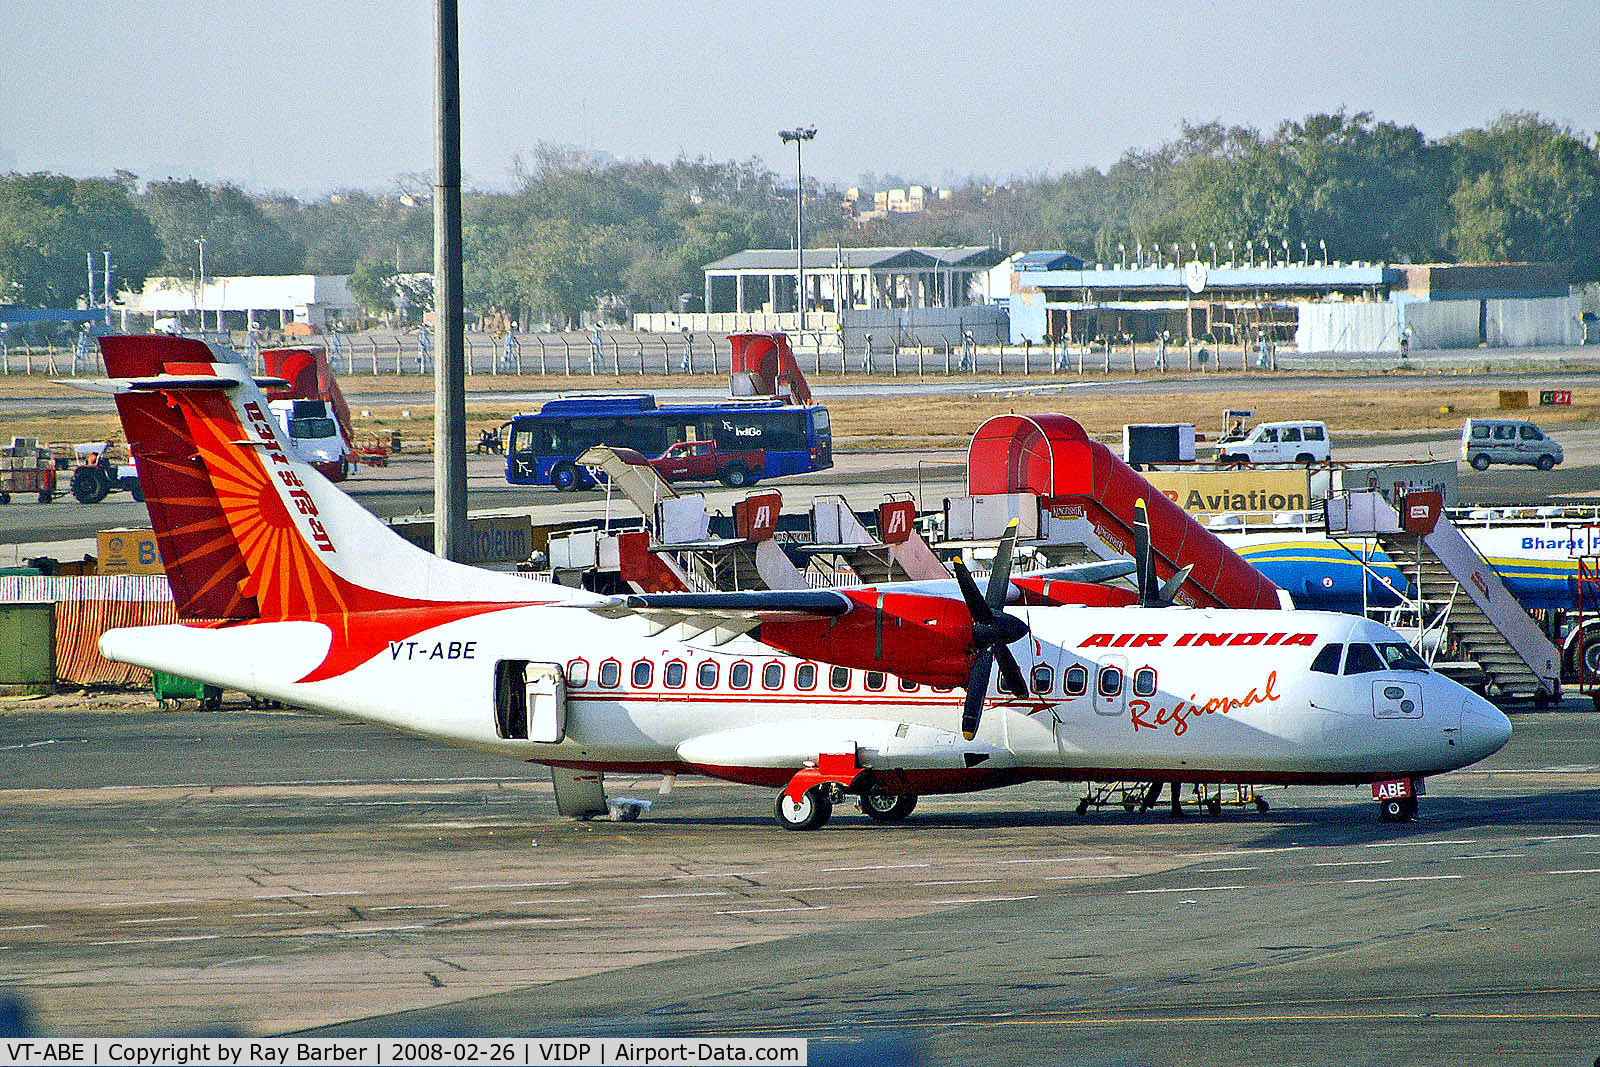 VT-ABE, 1992 ATR 42-320 C/N 333, VT-ABE   Aerospatiale ATR-42-320 [333] (Air India Regional) New Delhi-Indira Gandhi Int'l~VT 26/02/2008